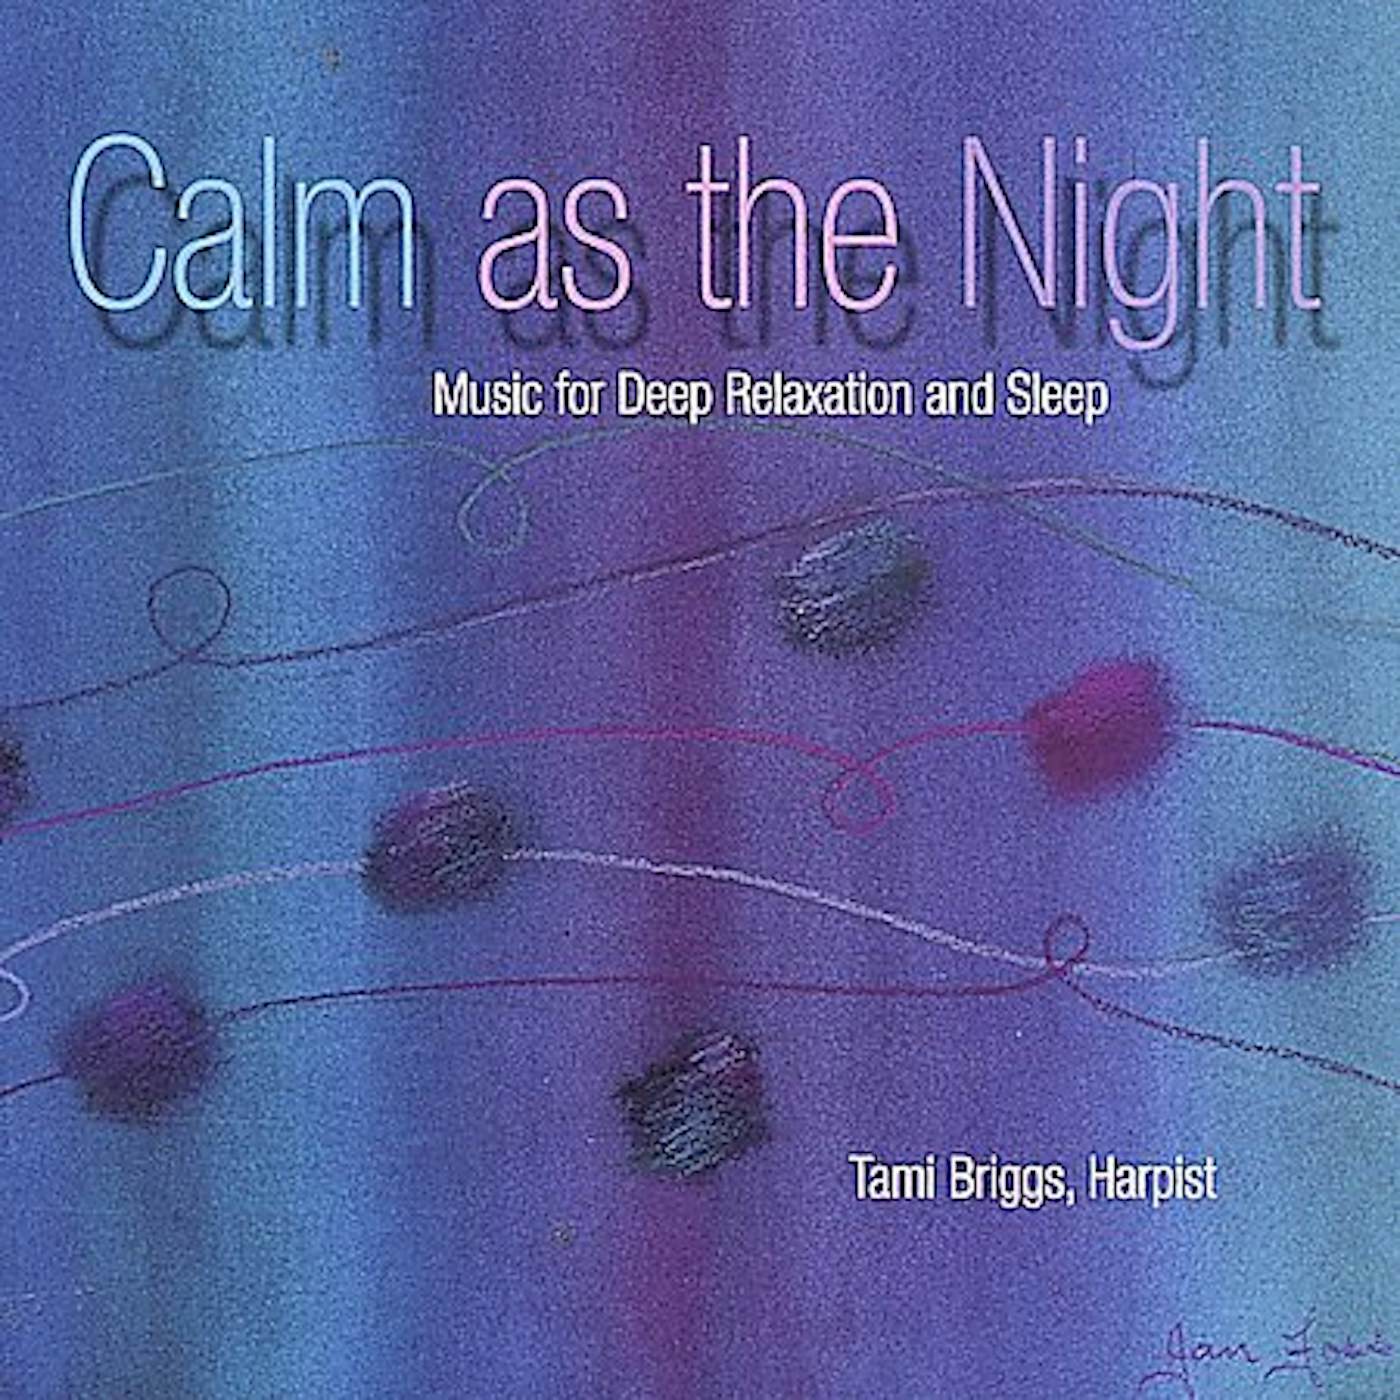 Tami Briggs CALM AS THE NIGHT CD